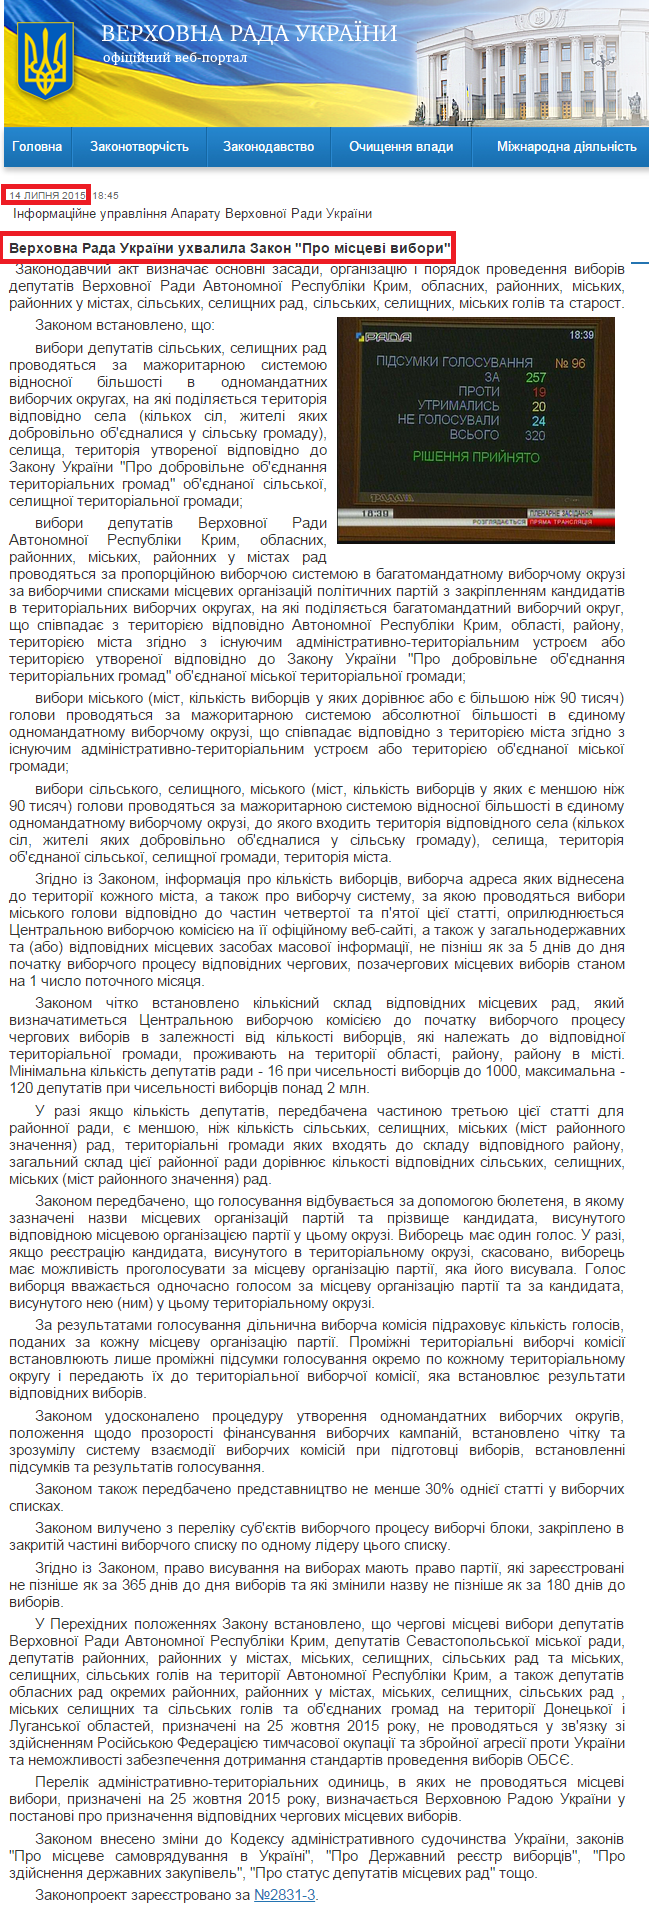 http://rada.gov.ua/news/Novyny/113636.html